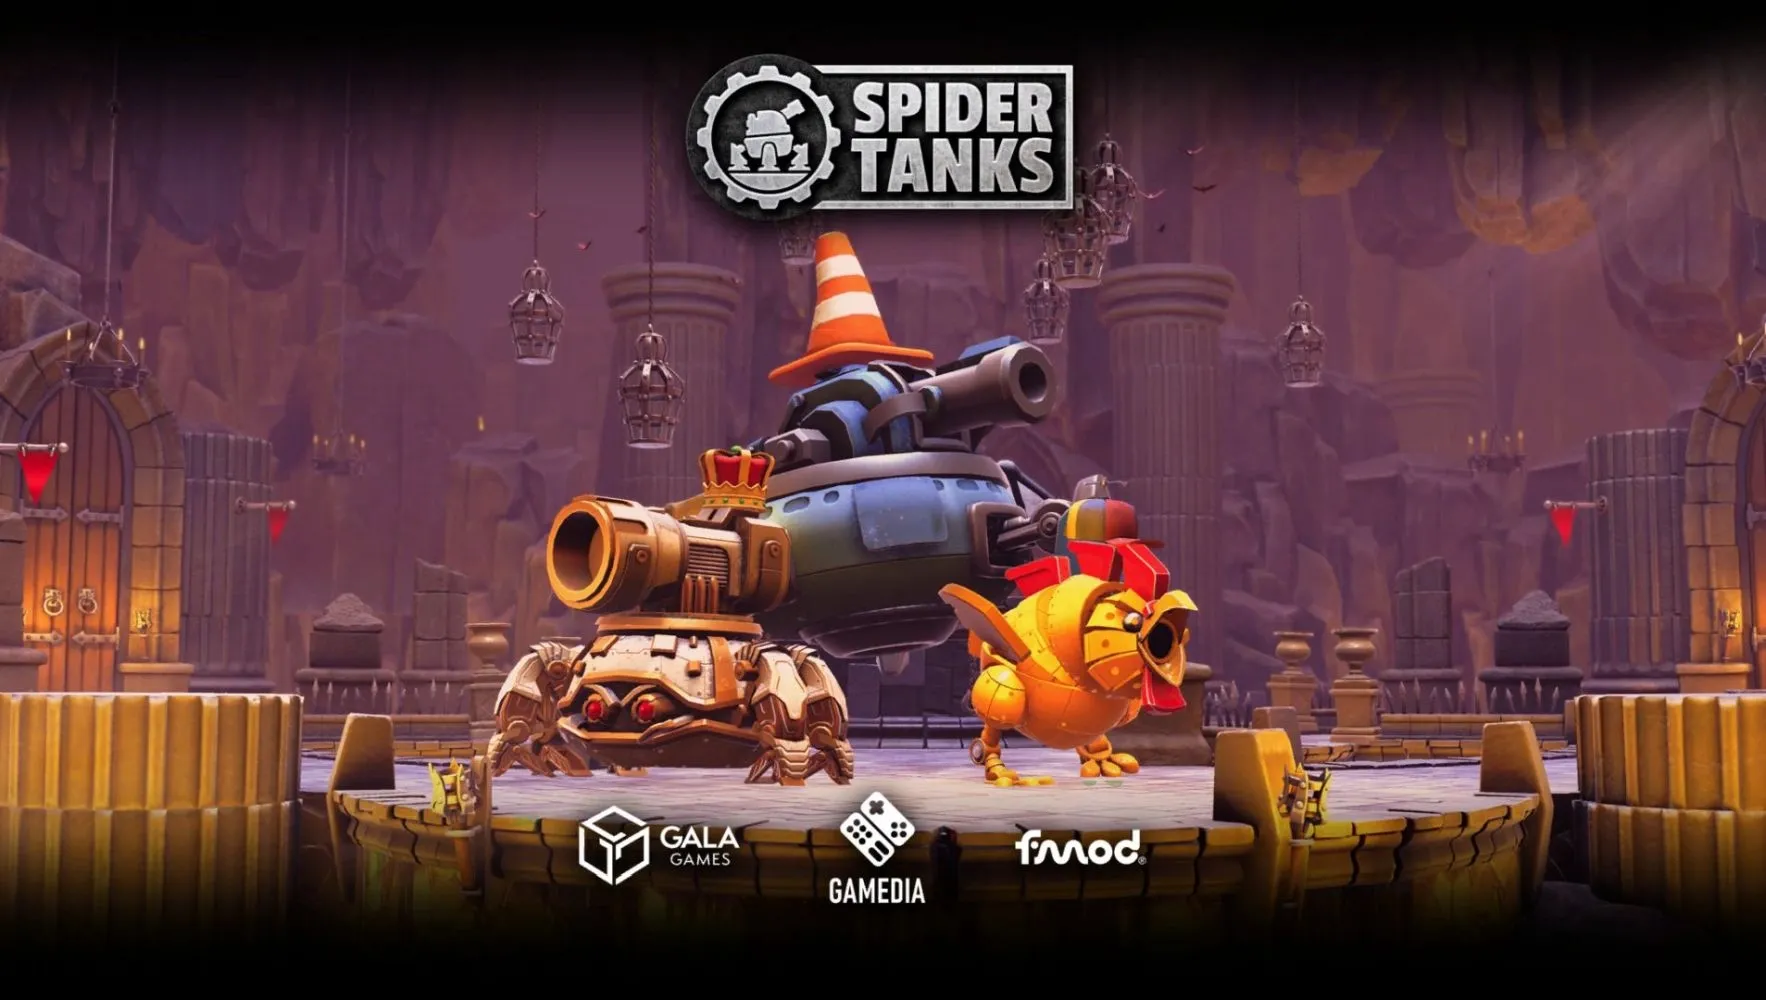 Spider Tanks Gala Games